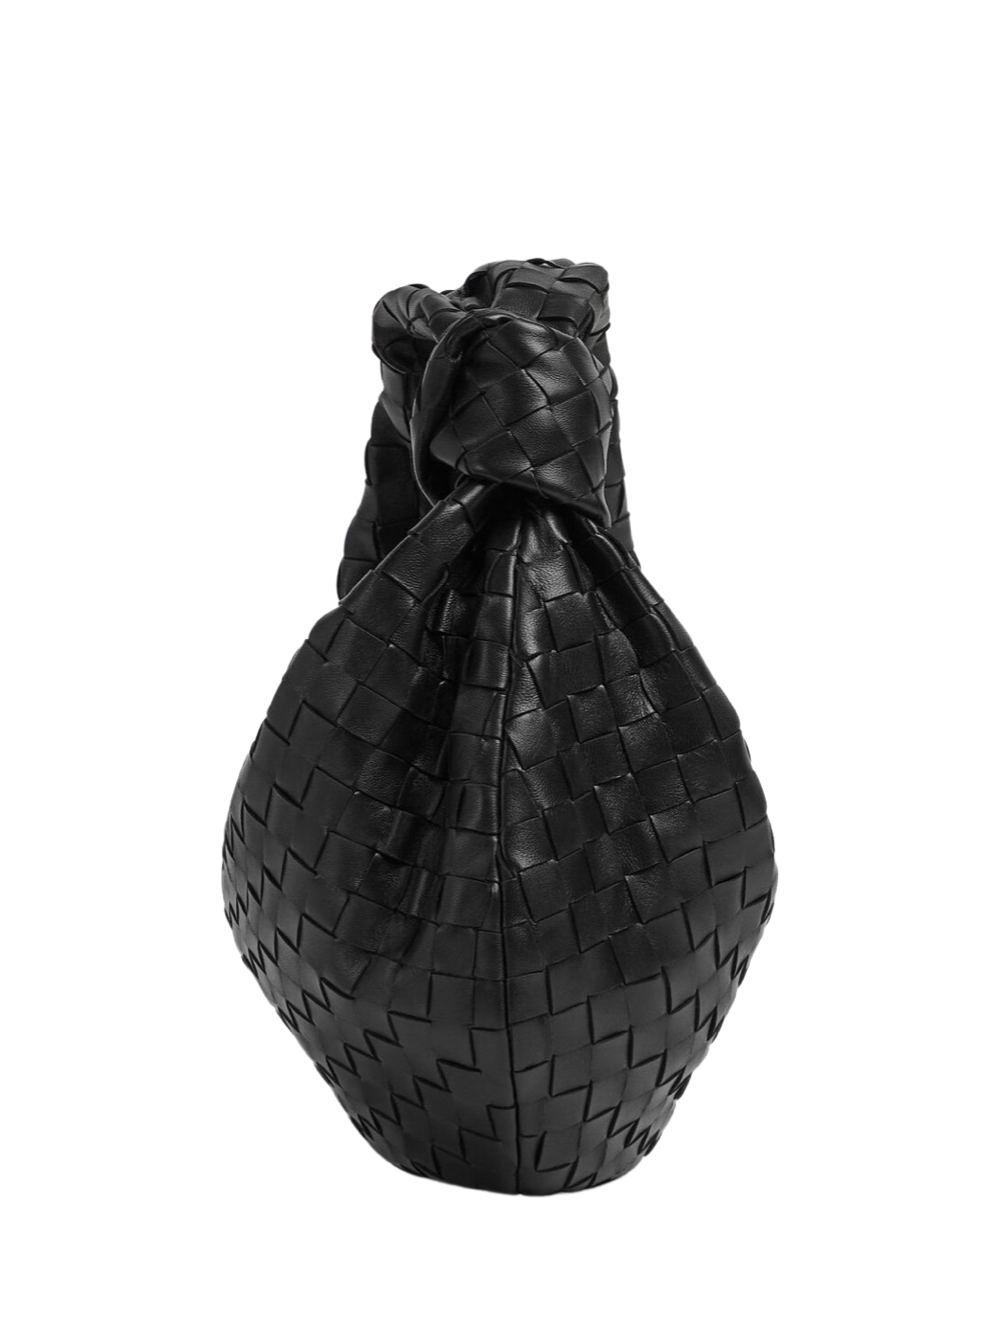 Black Jodie Teen Intrecciato-leather shoulder bag, Bottega Veneta